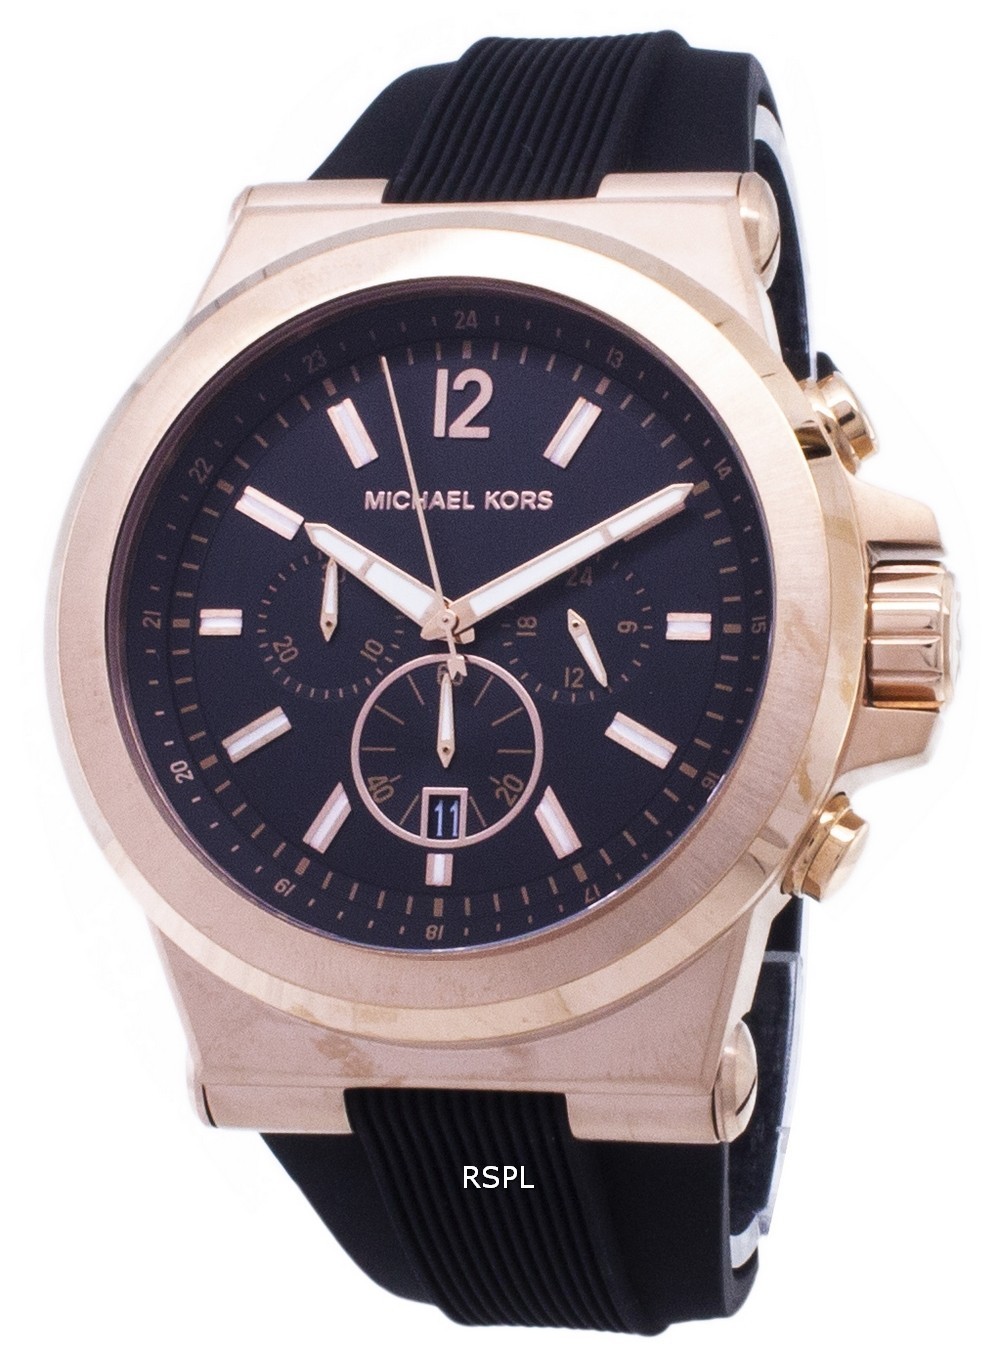 Michael Kors Chronograph MK8184 Men's Watch | eBay